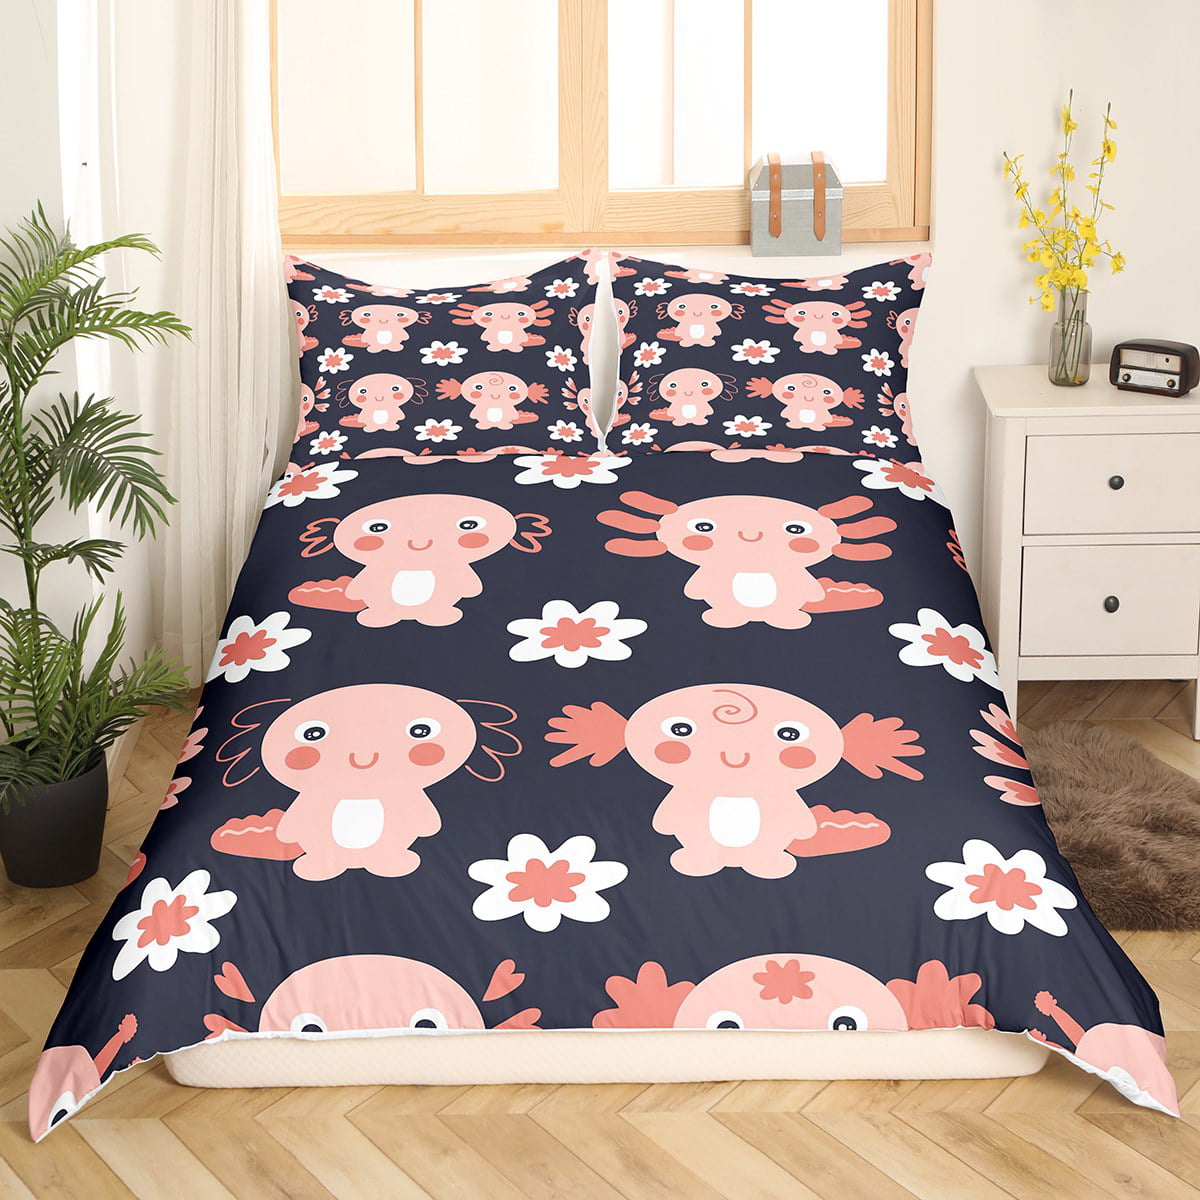 Axolotl Bedding Set Pink and Blue Axolotl Pattern Kawaii Twin Fitted Sheet